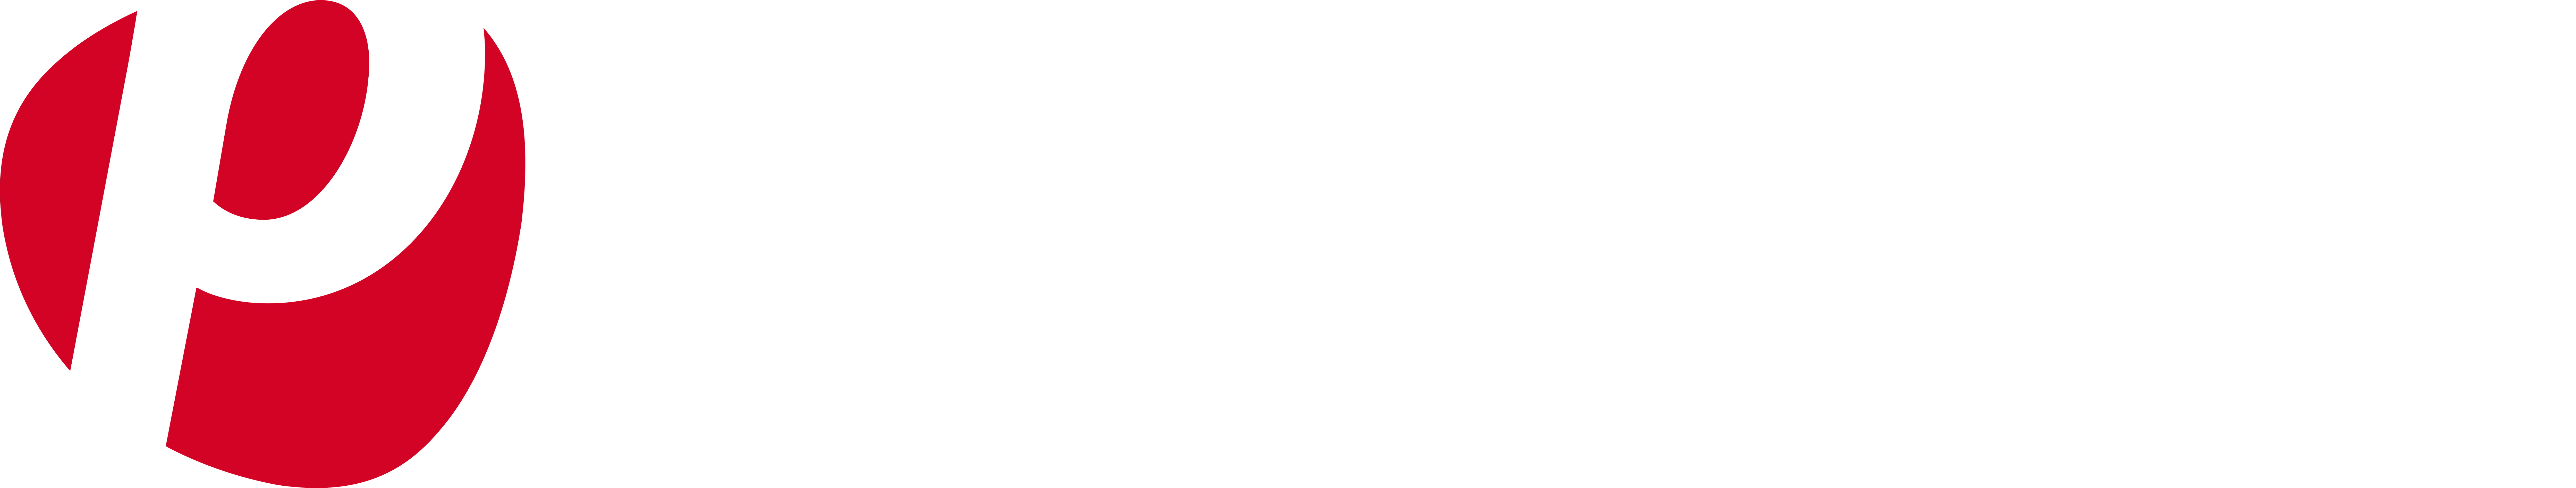 PlentyMarkets_Logo